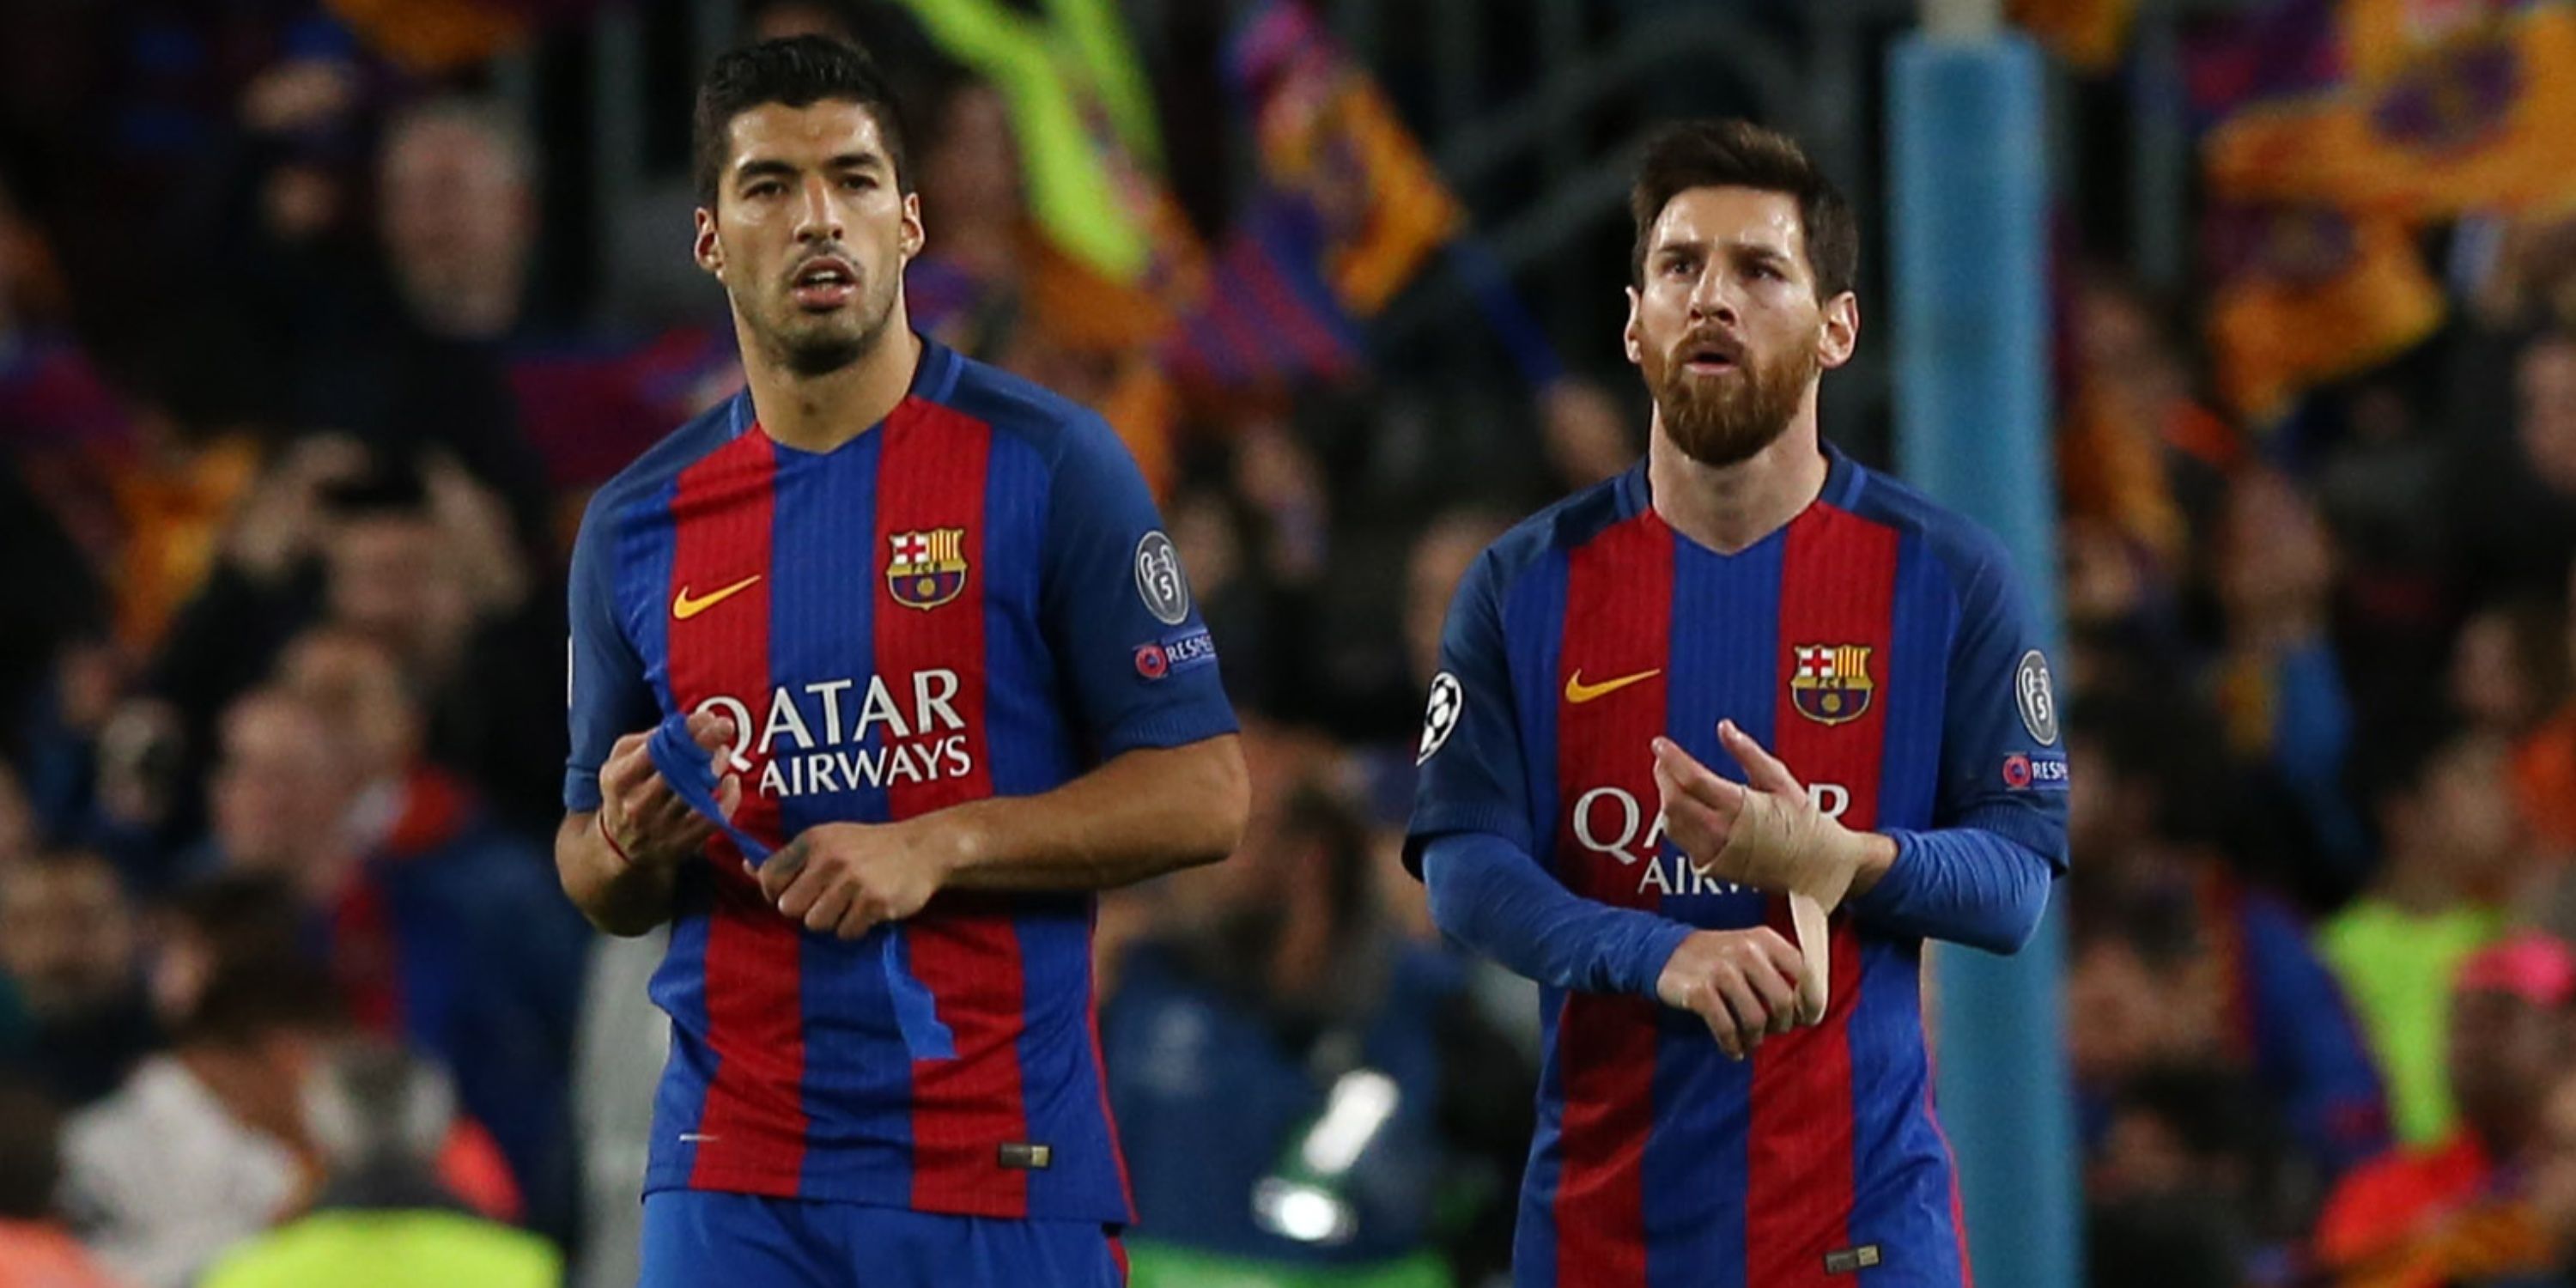 Barcelona's Luis Suarez and Lionel Messi